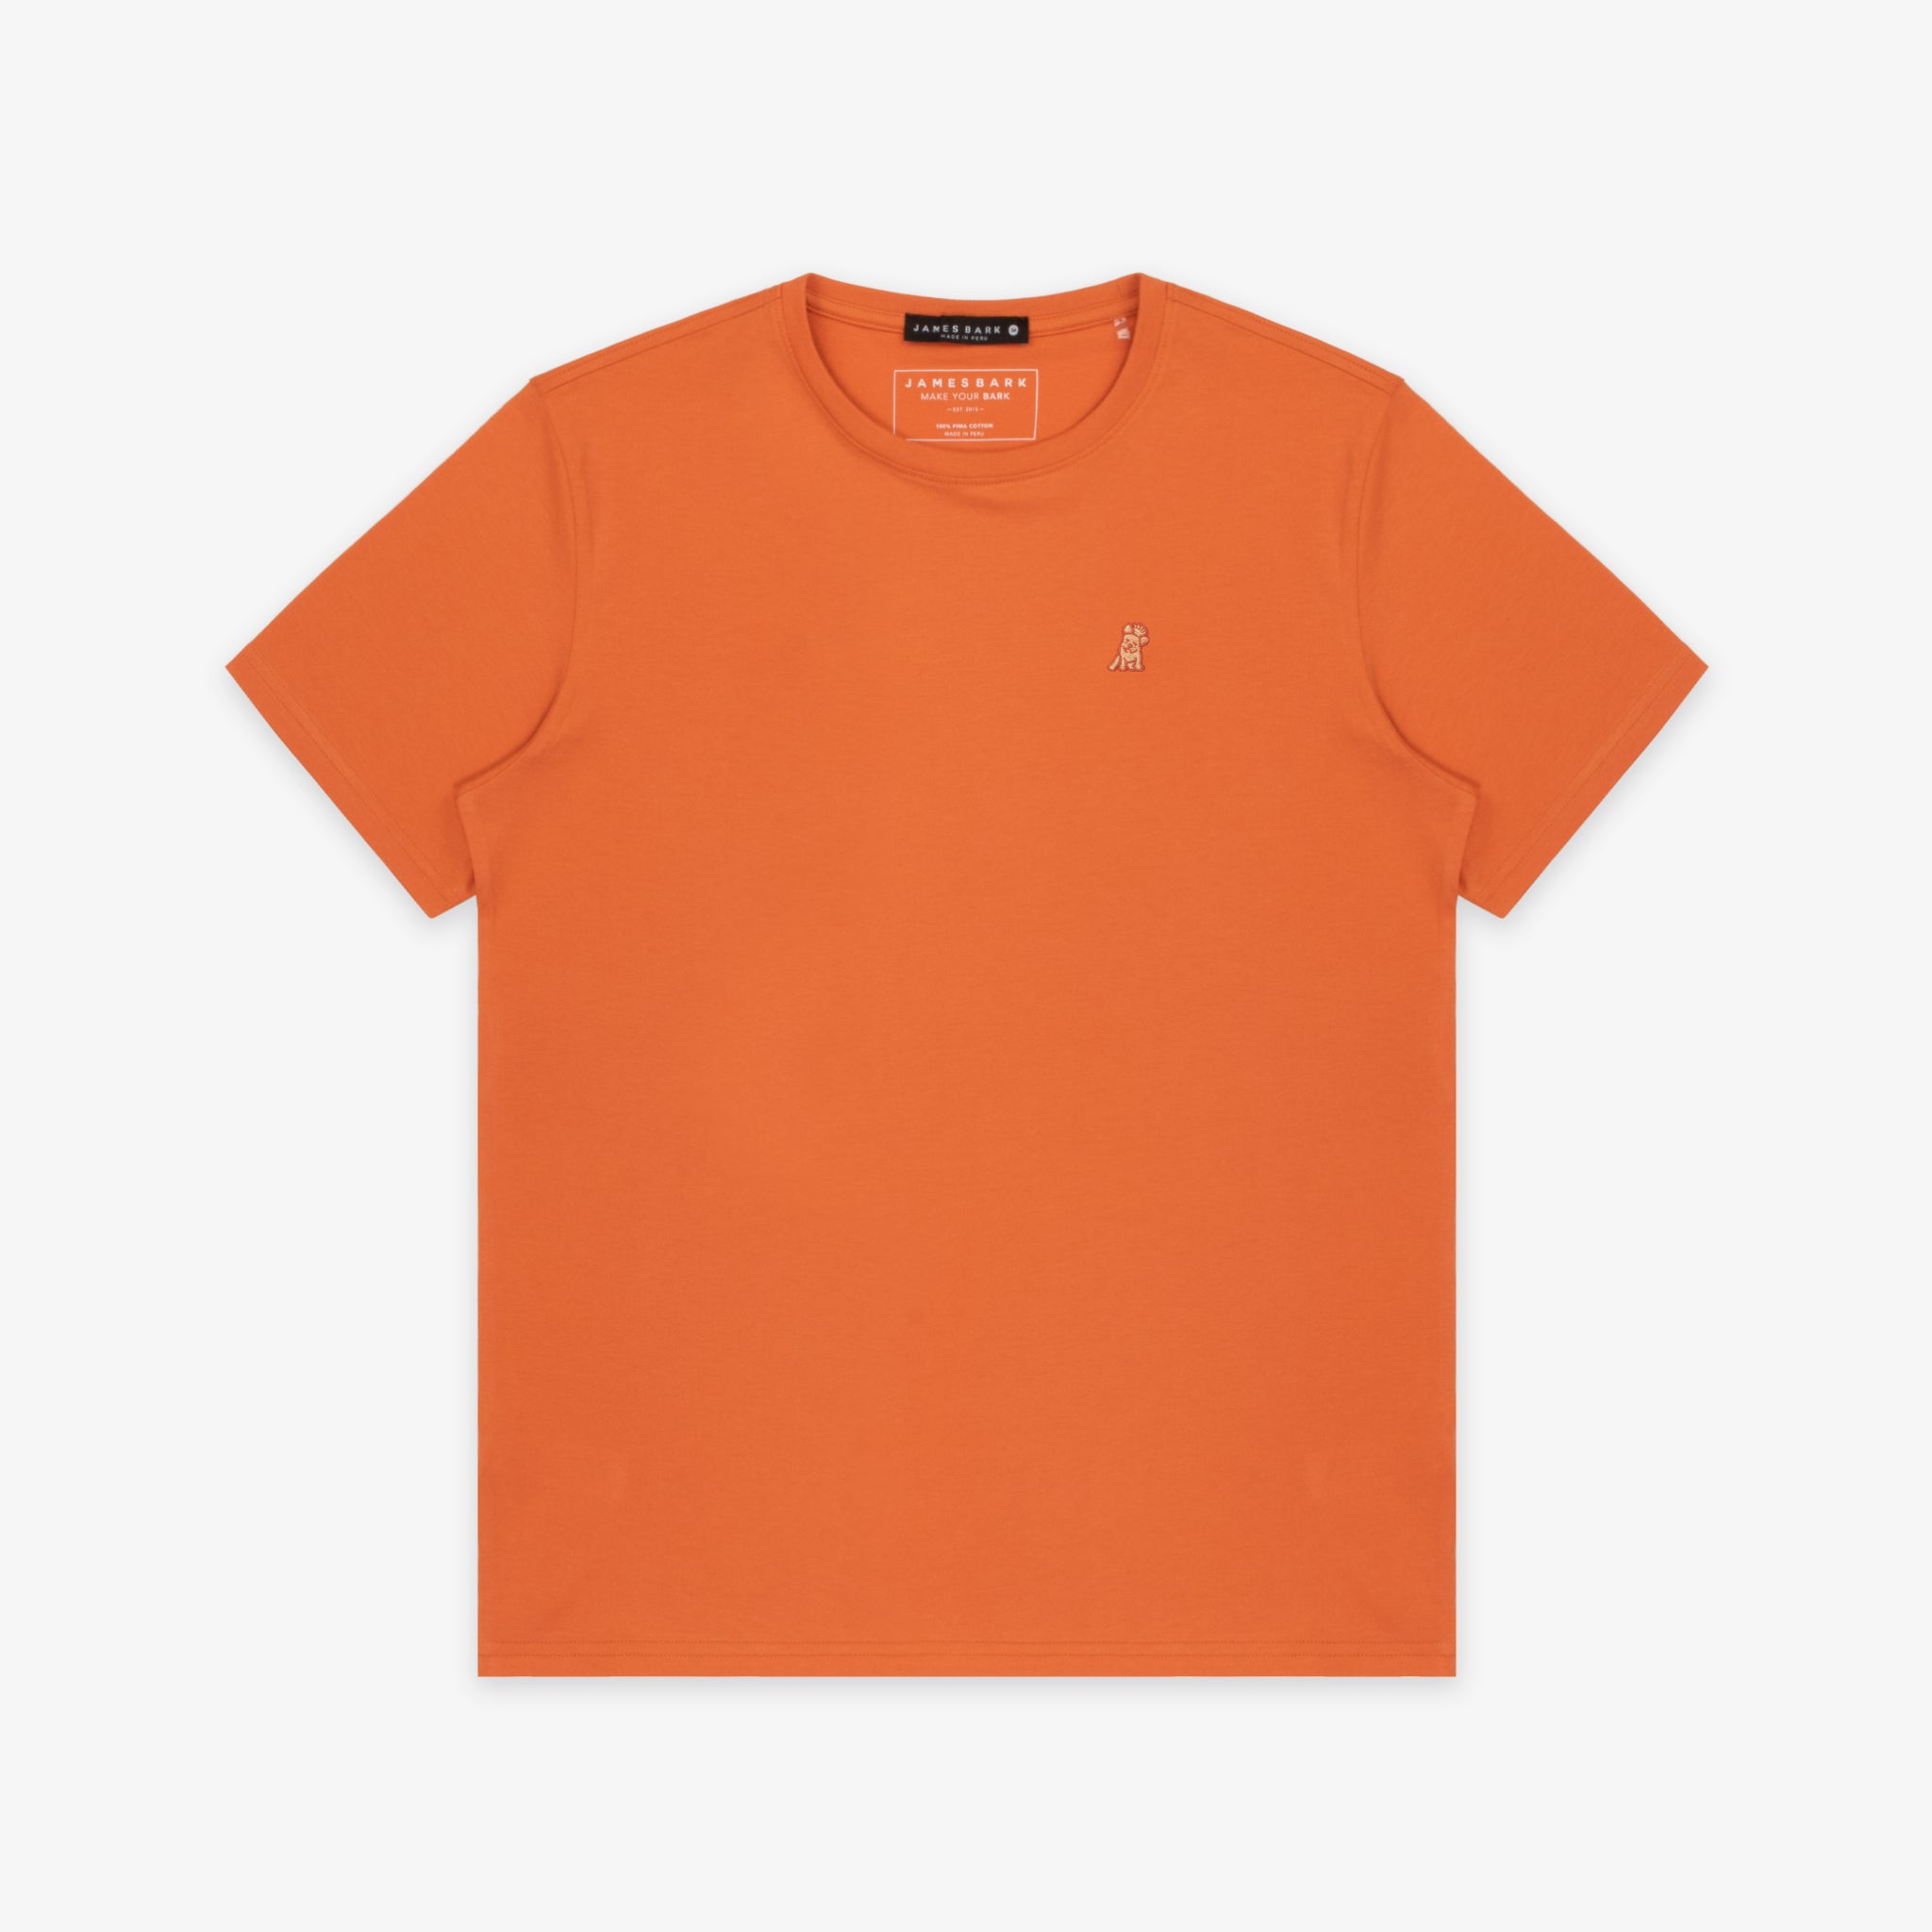 Men's Jaffa Orange Crew Neck Jersey T-Shirt - Orange Bark S / Jaffa Orange / Light Peach W Peach Border